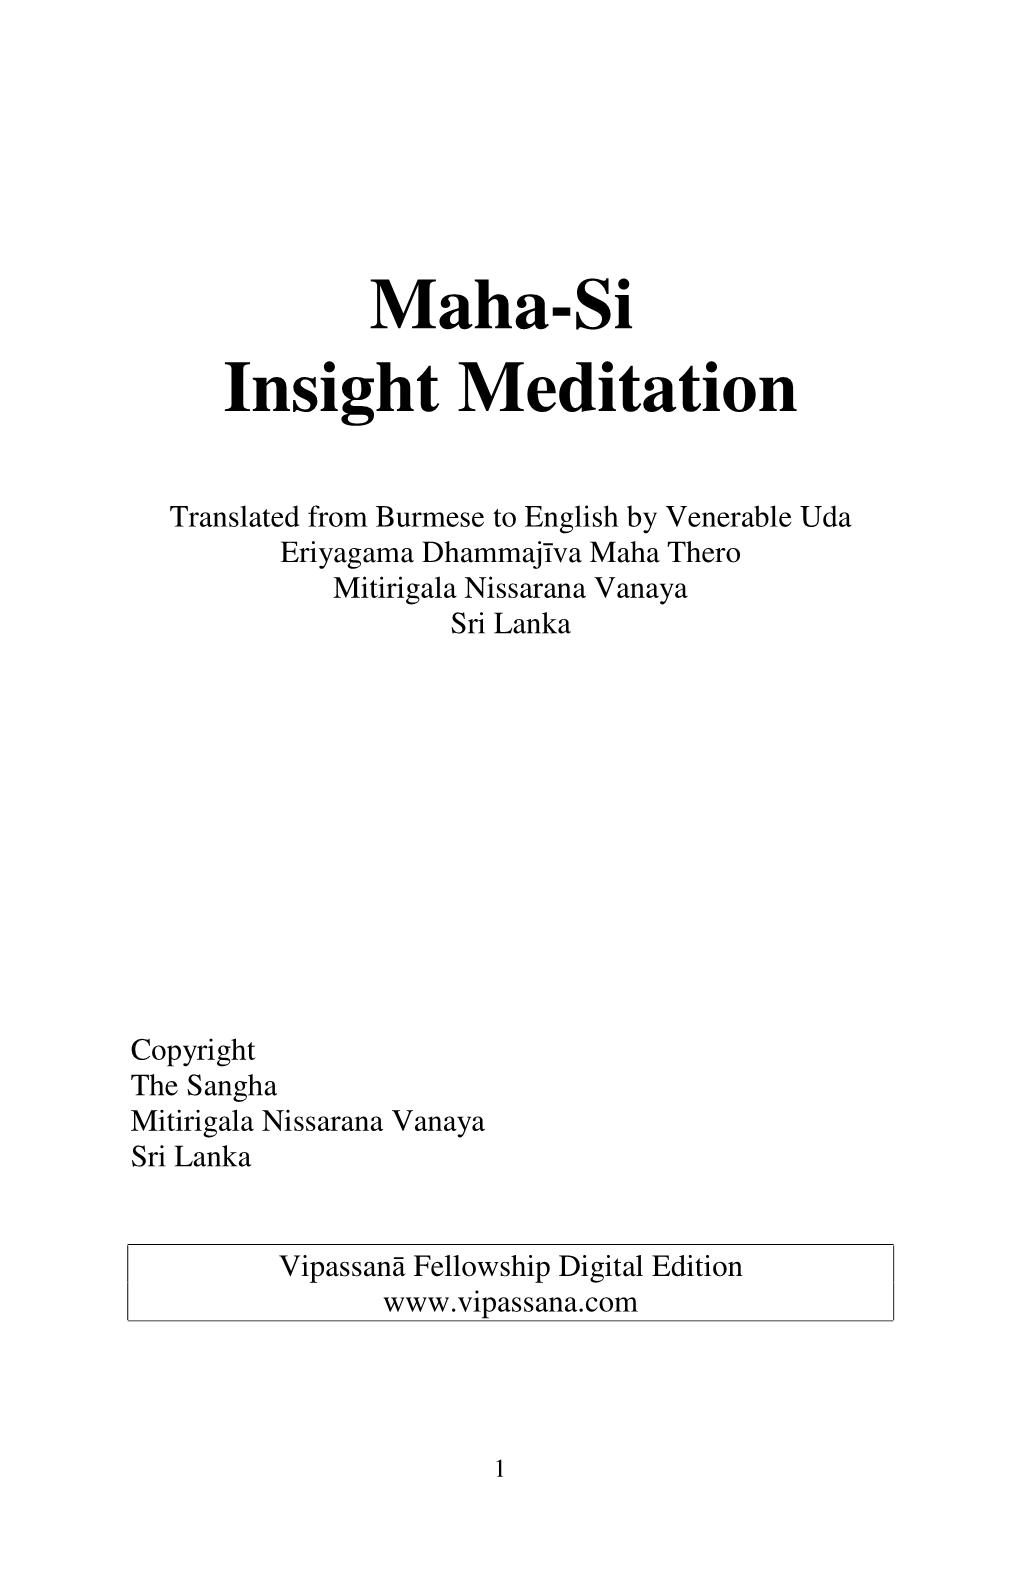 Mahasi Insight Meditation